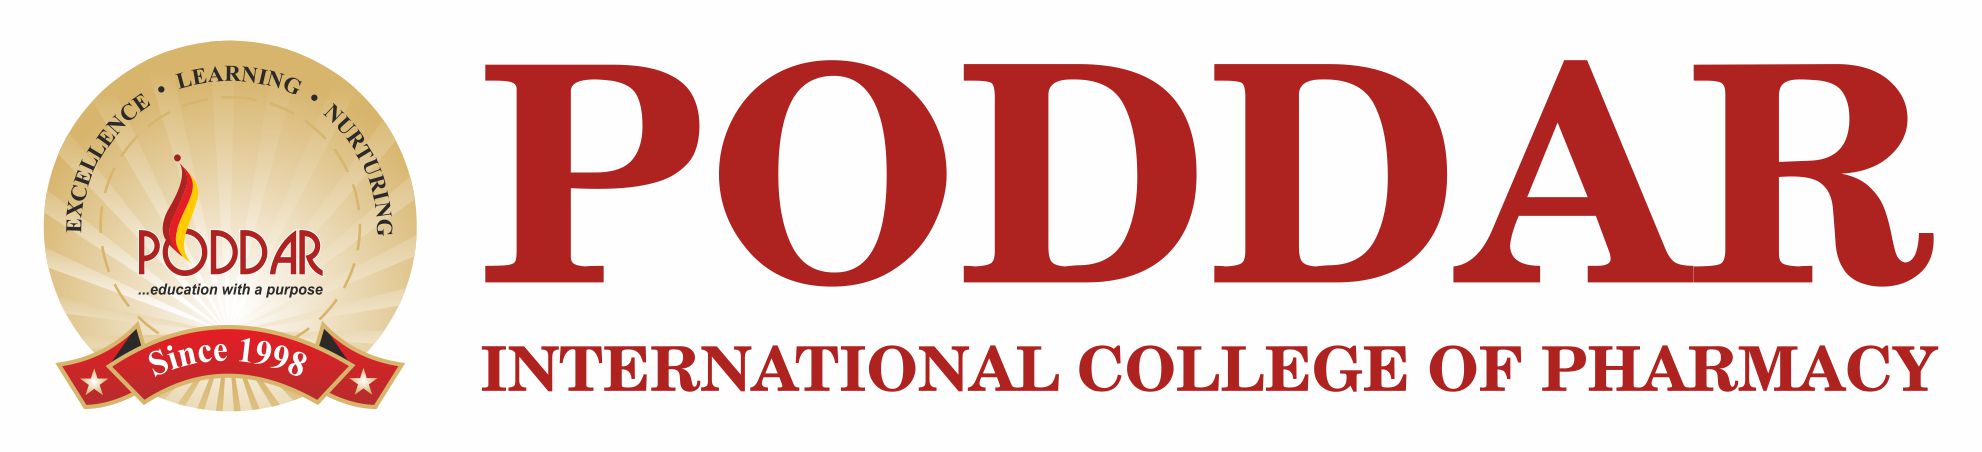 PODDAR International College of Pharmacy